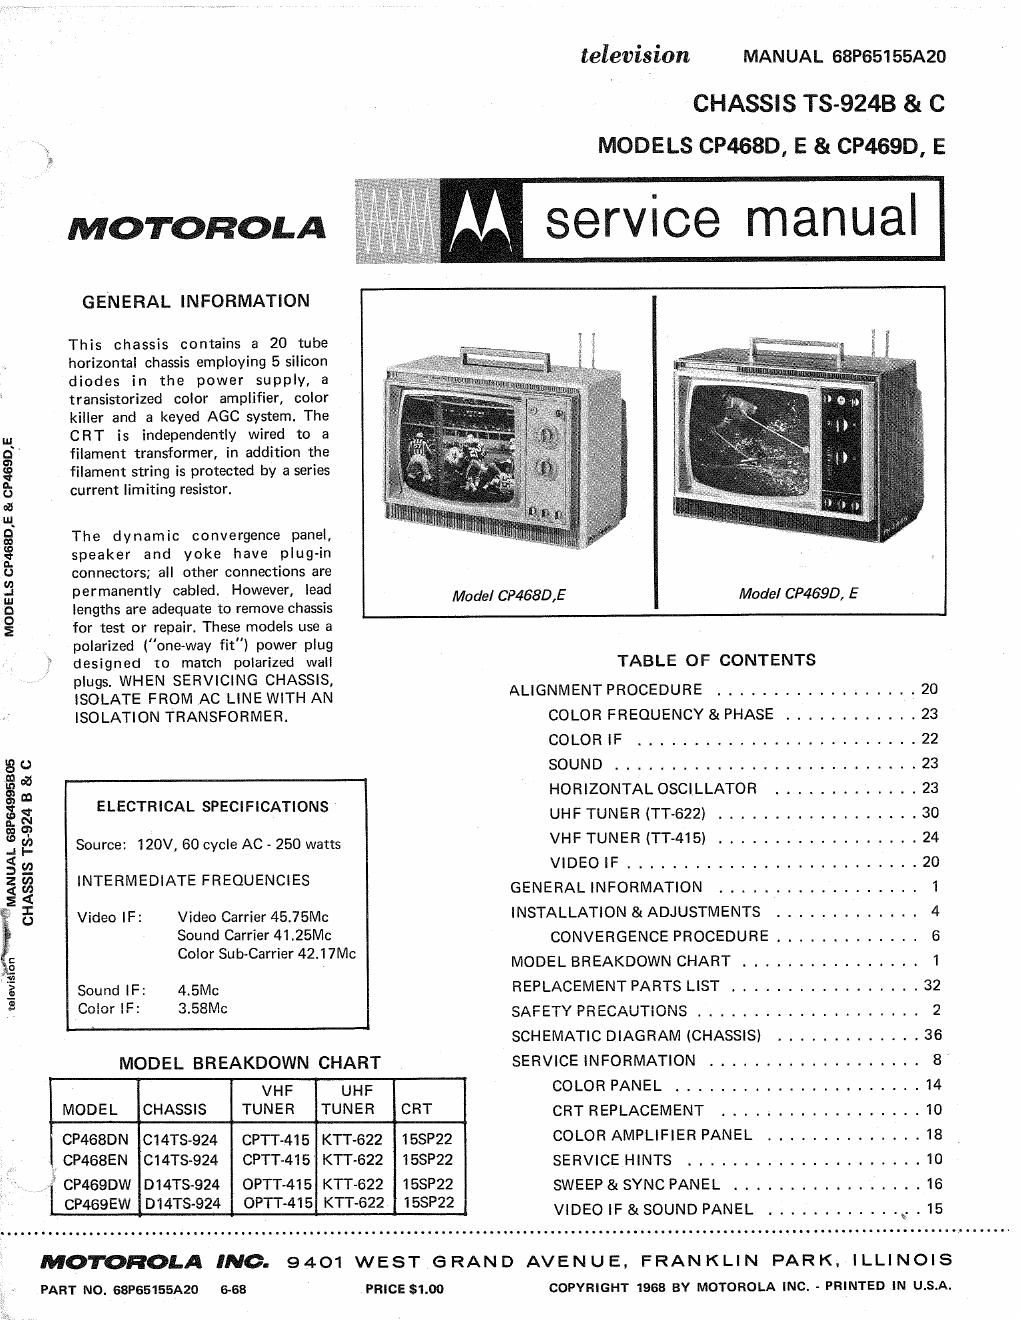 motorola cp 469 e service manual